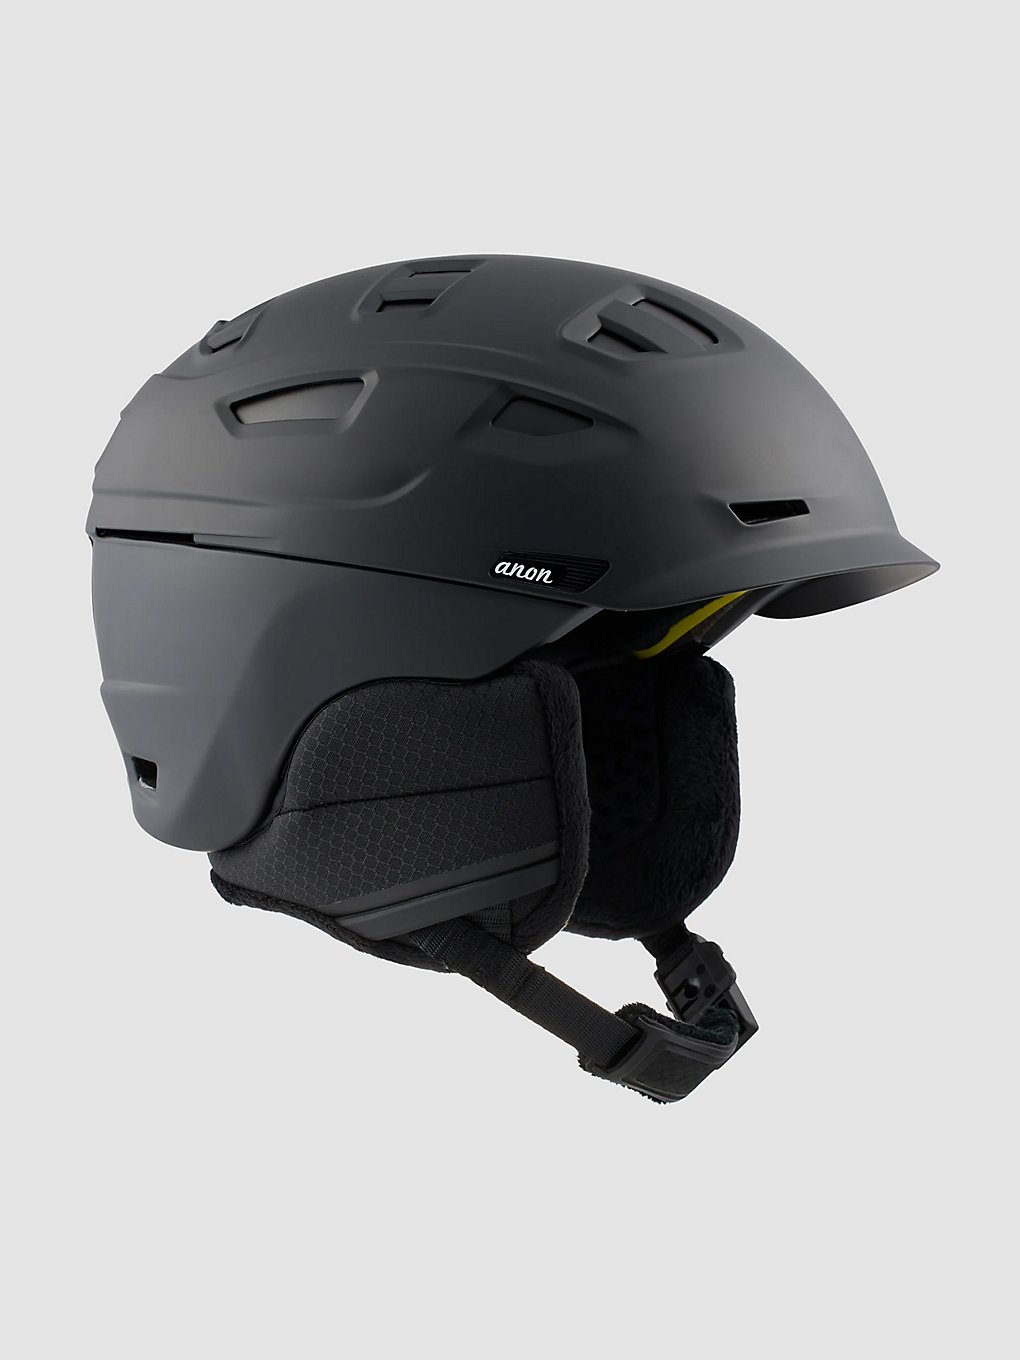 Anon Nova MIPS Helm black eu kaufen